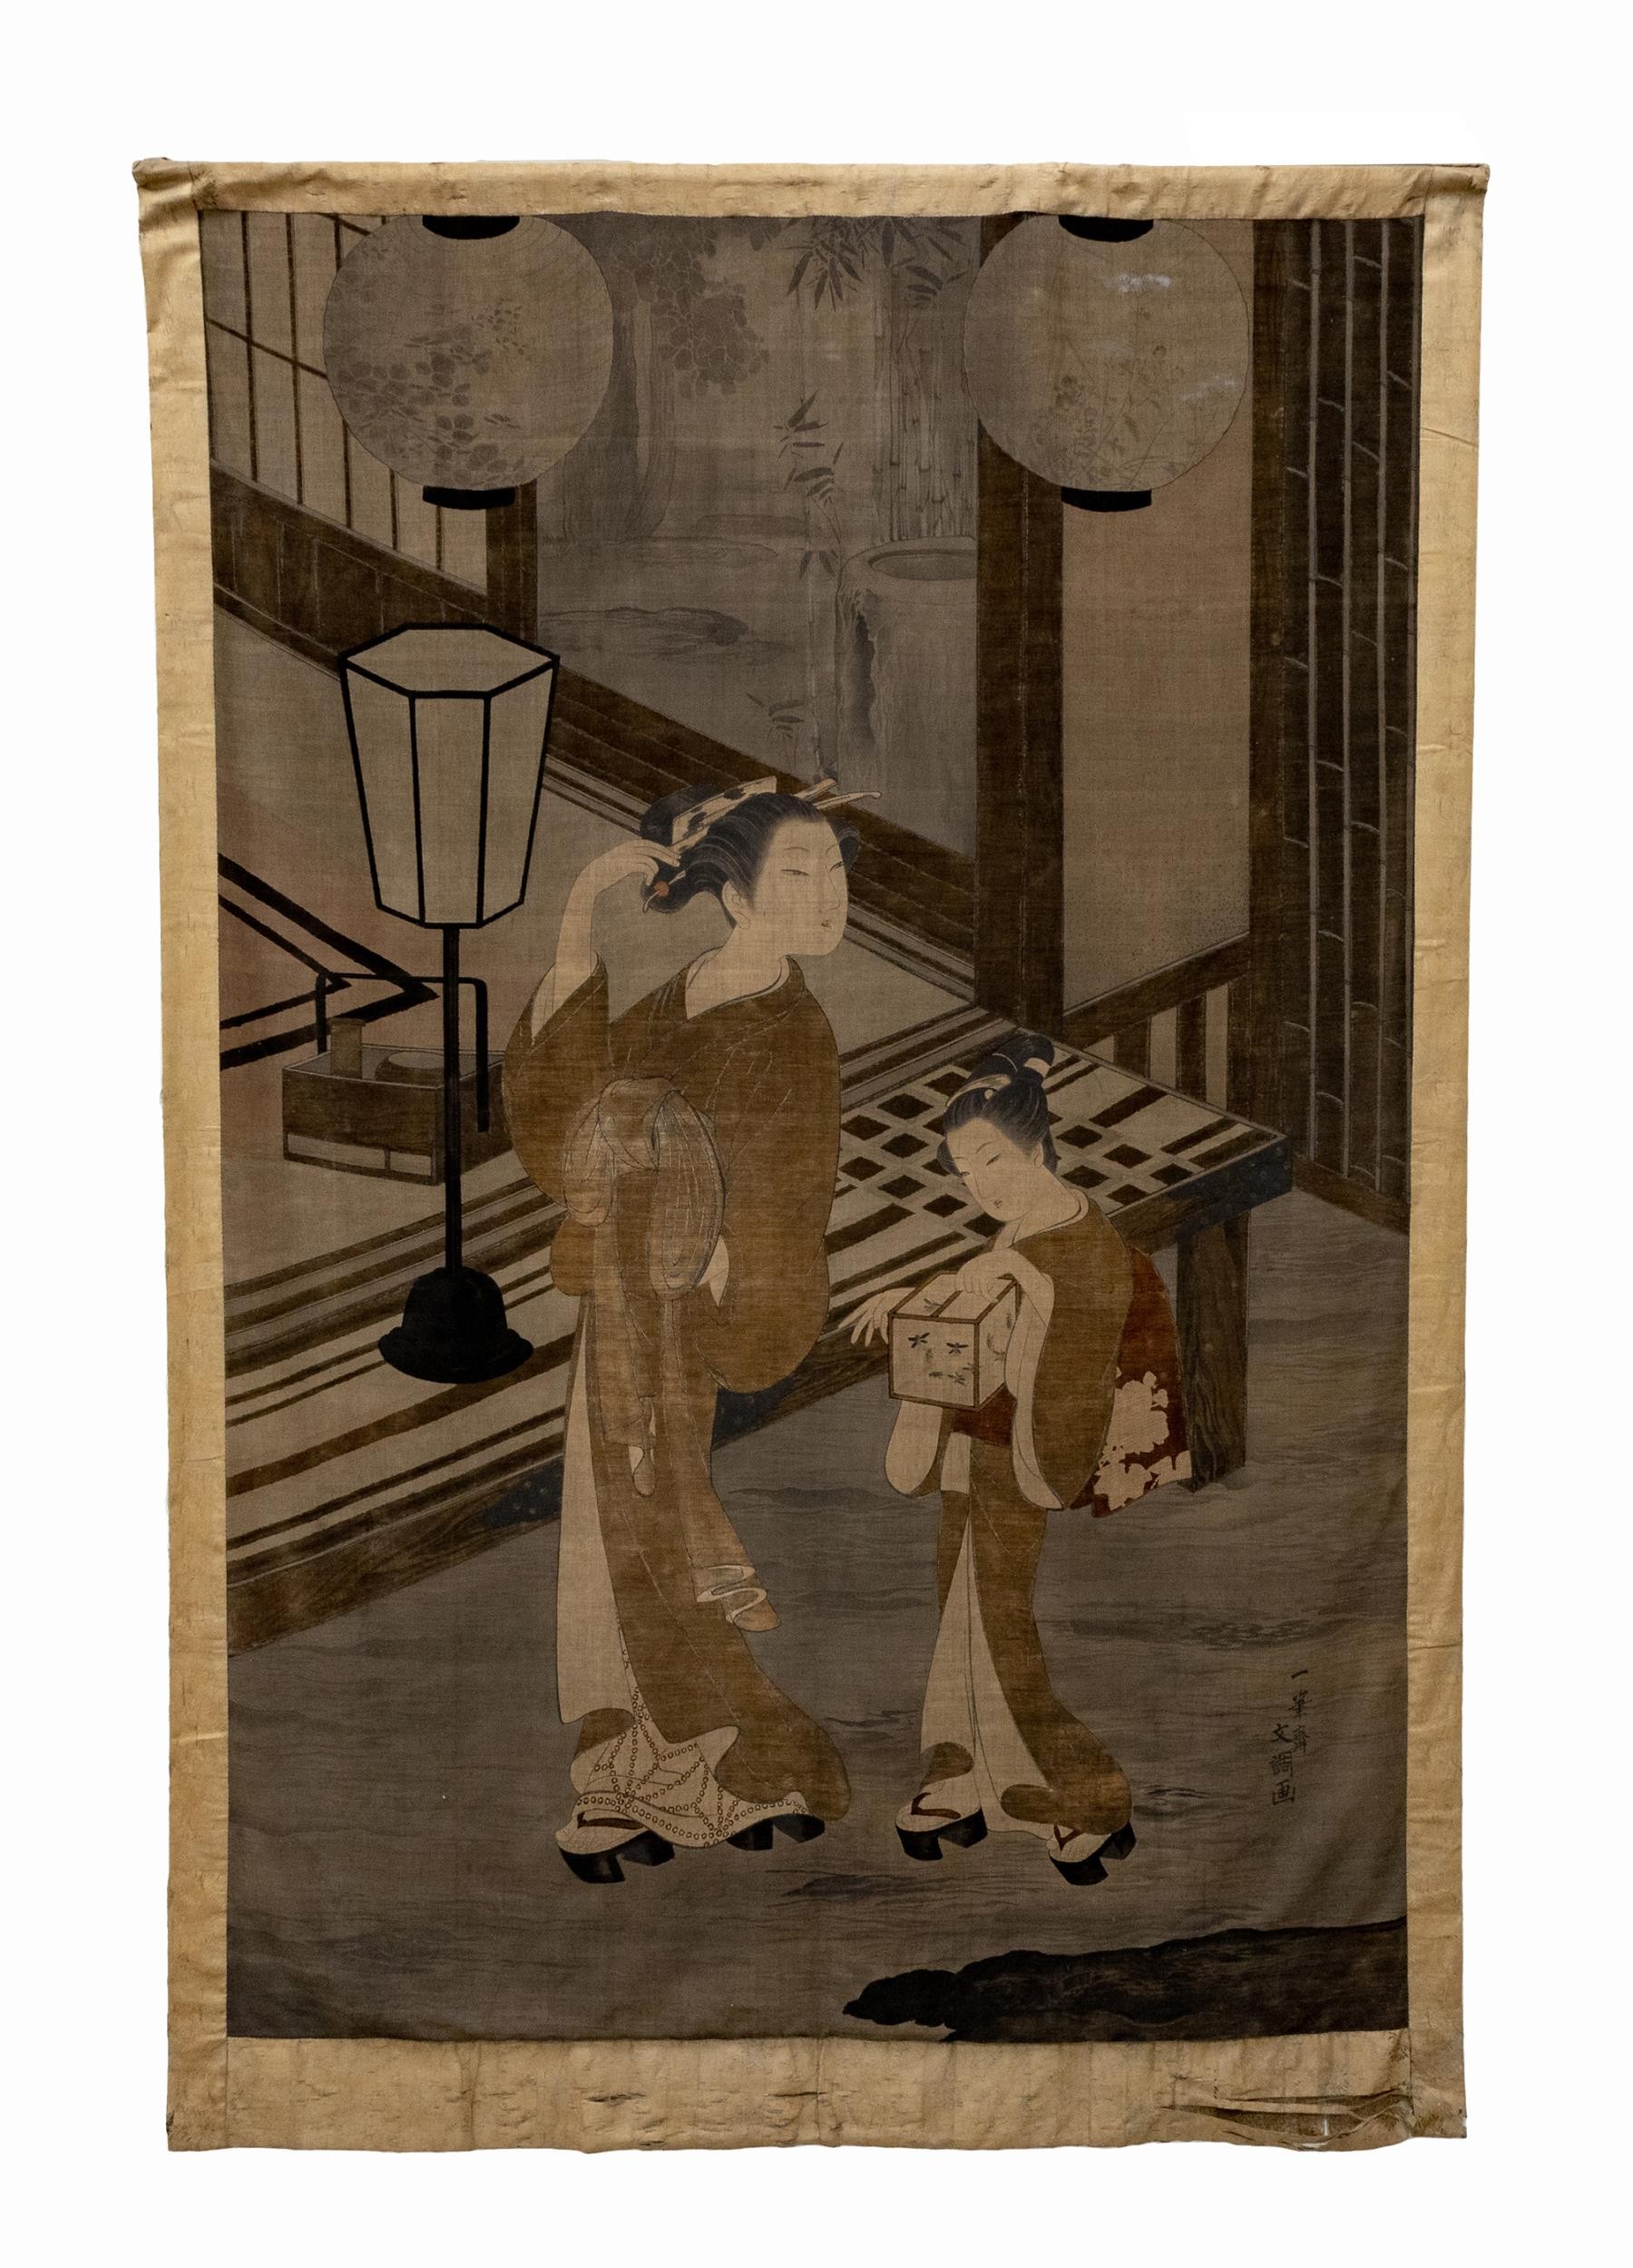 A JAPANESE Y?ZEN-DYDED CUT VELVET "GEISHA" PANEL, SIGNED BUNCHO IPPITSUSAI, C. 1755 - 1790